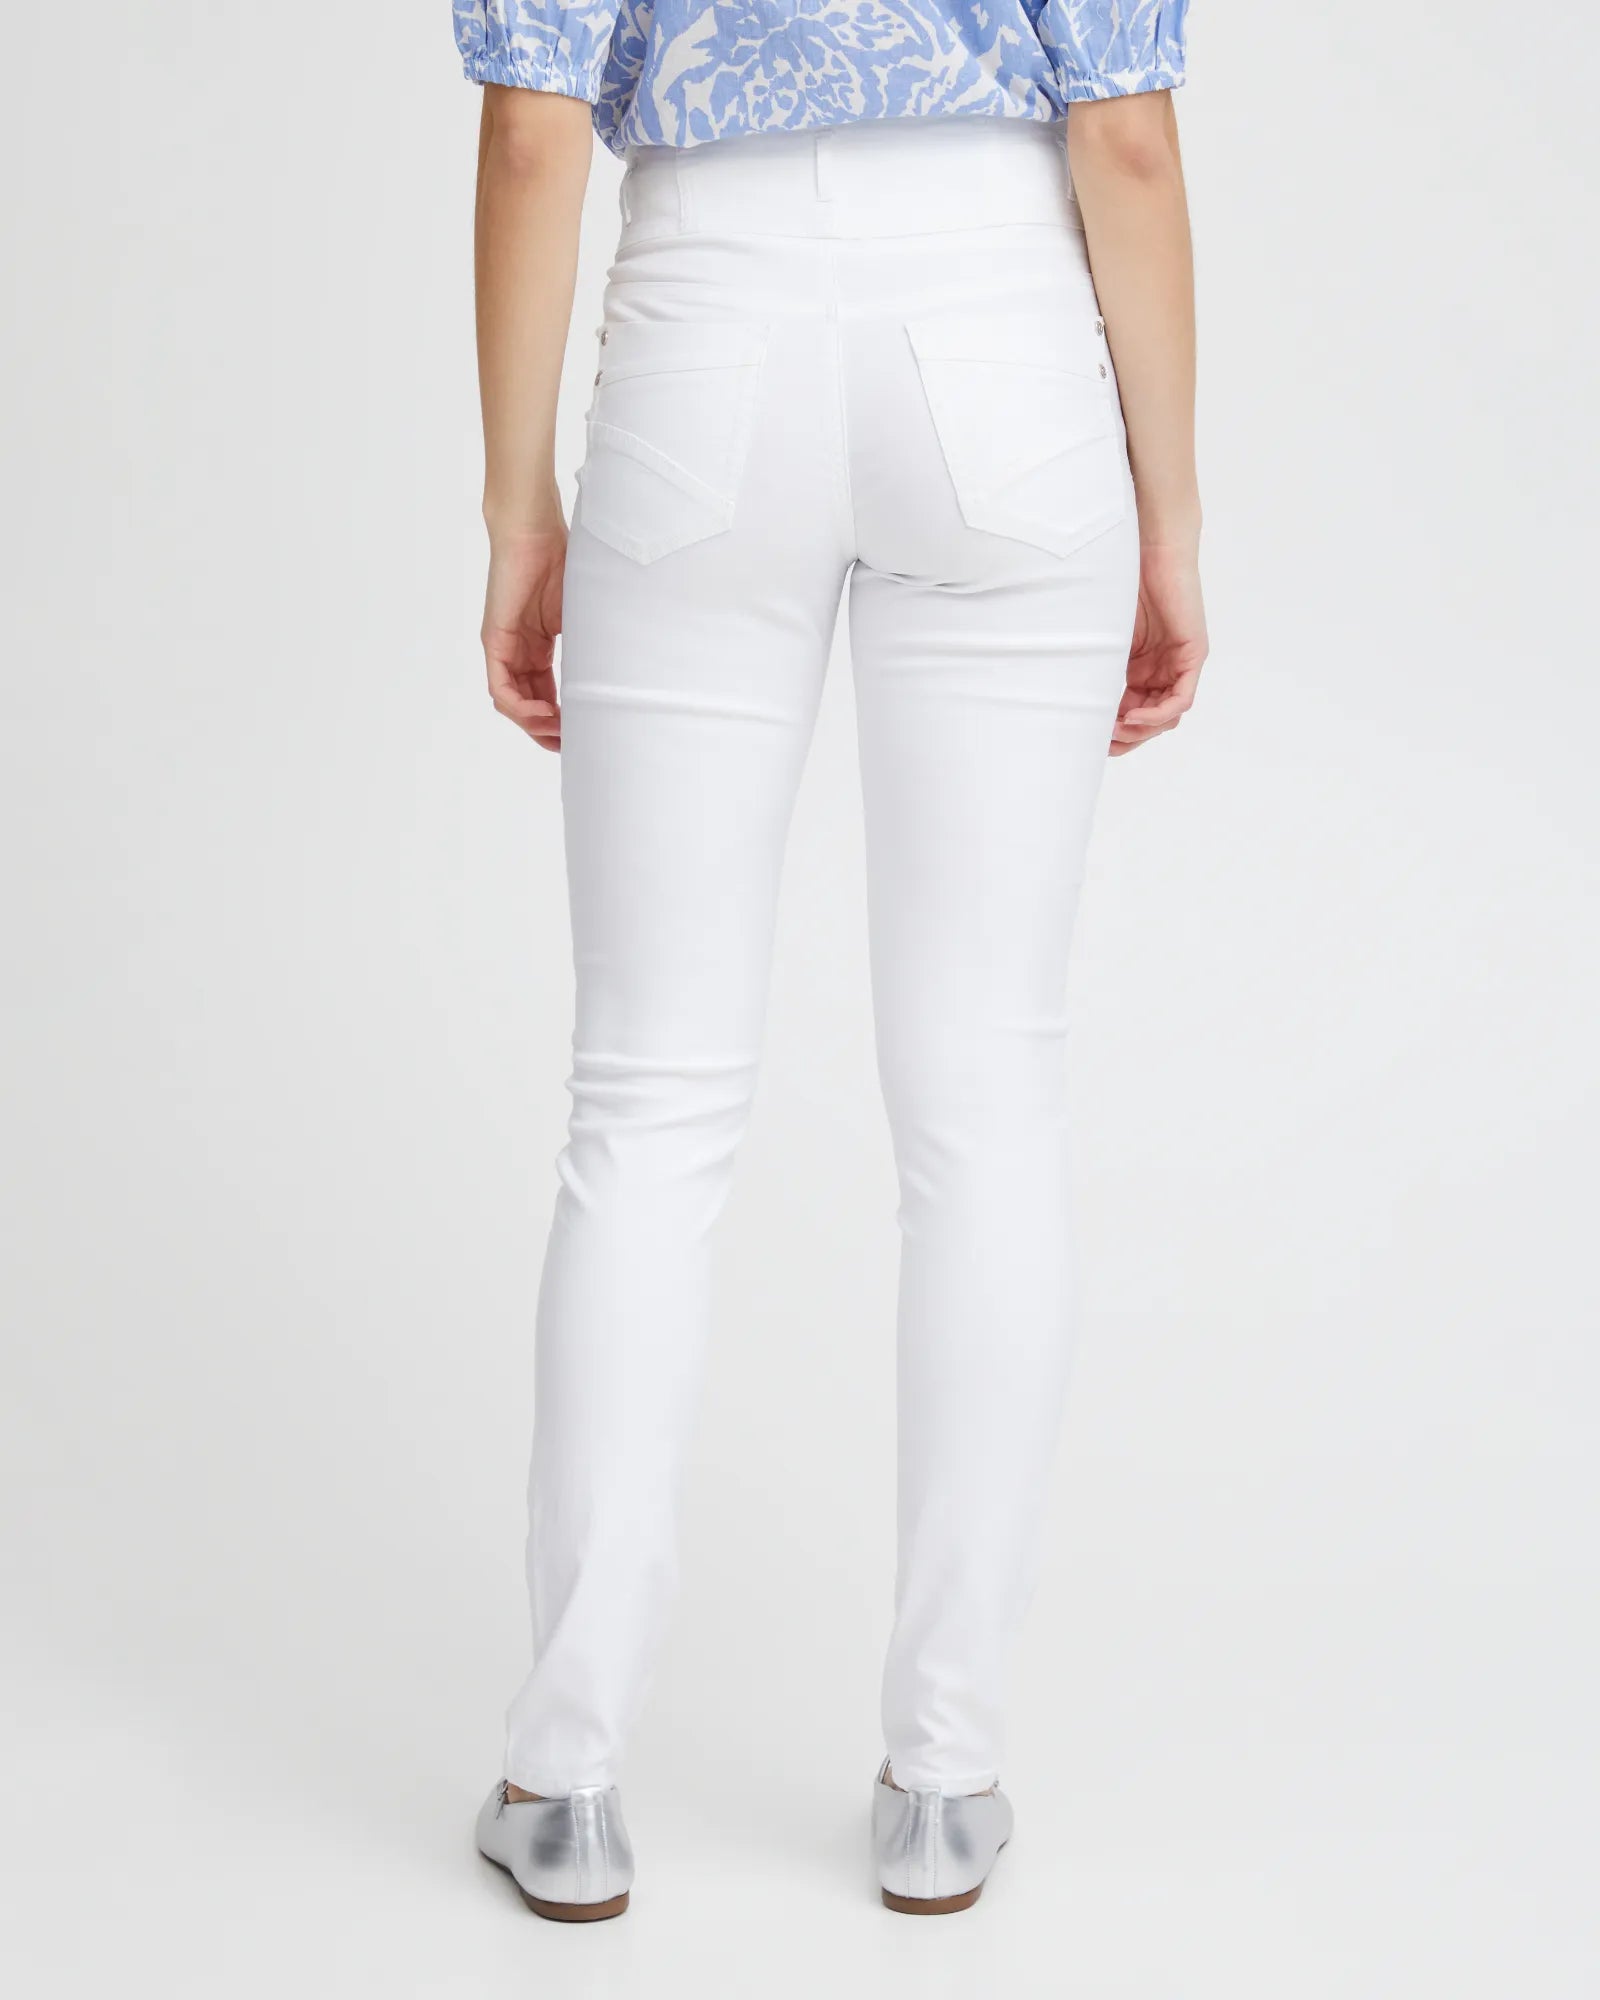 FRZALIN Jeans - White